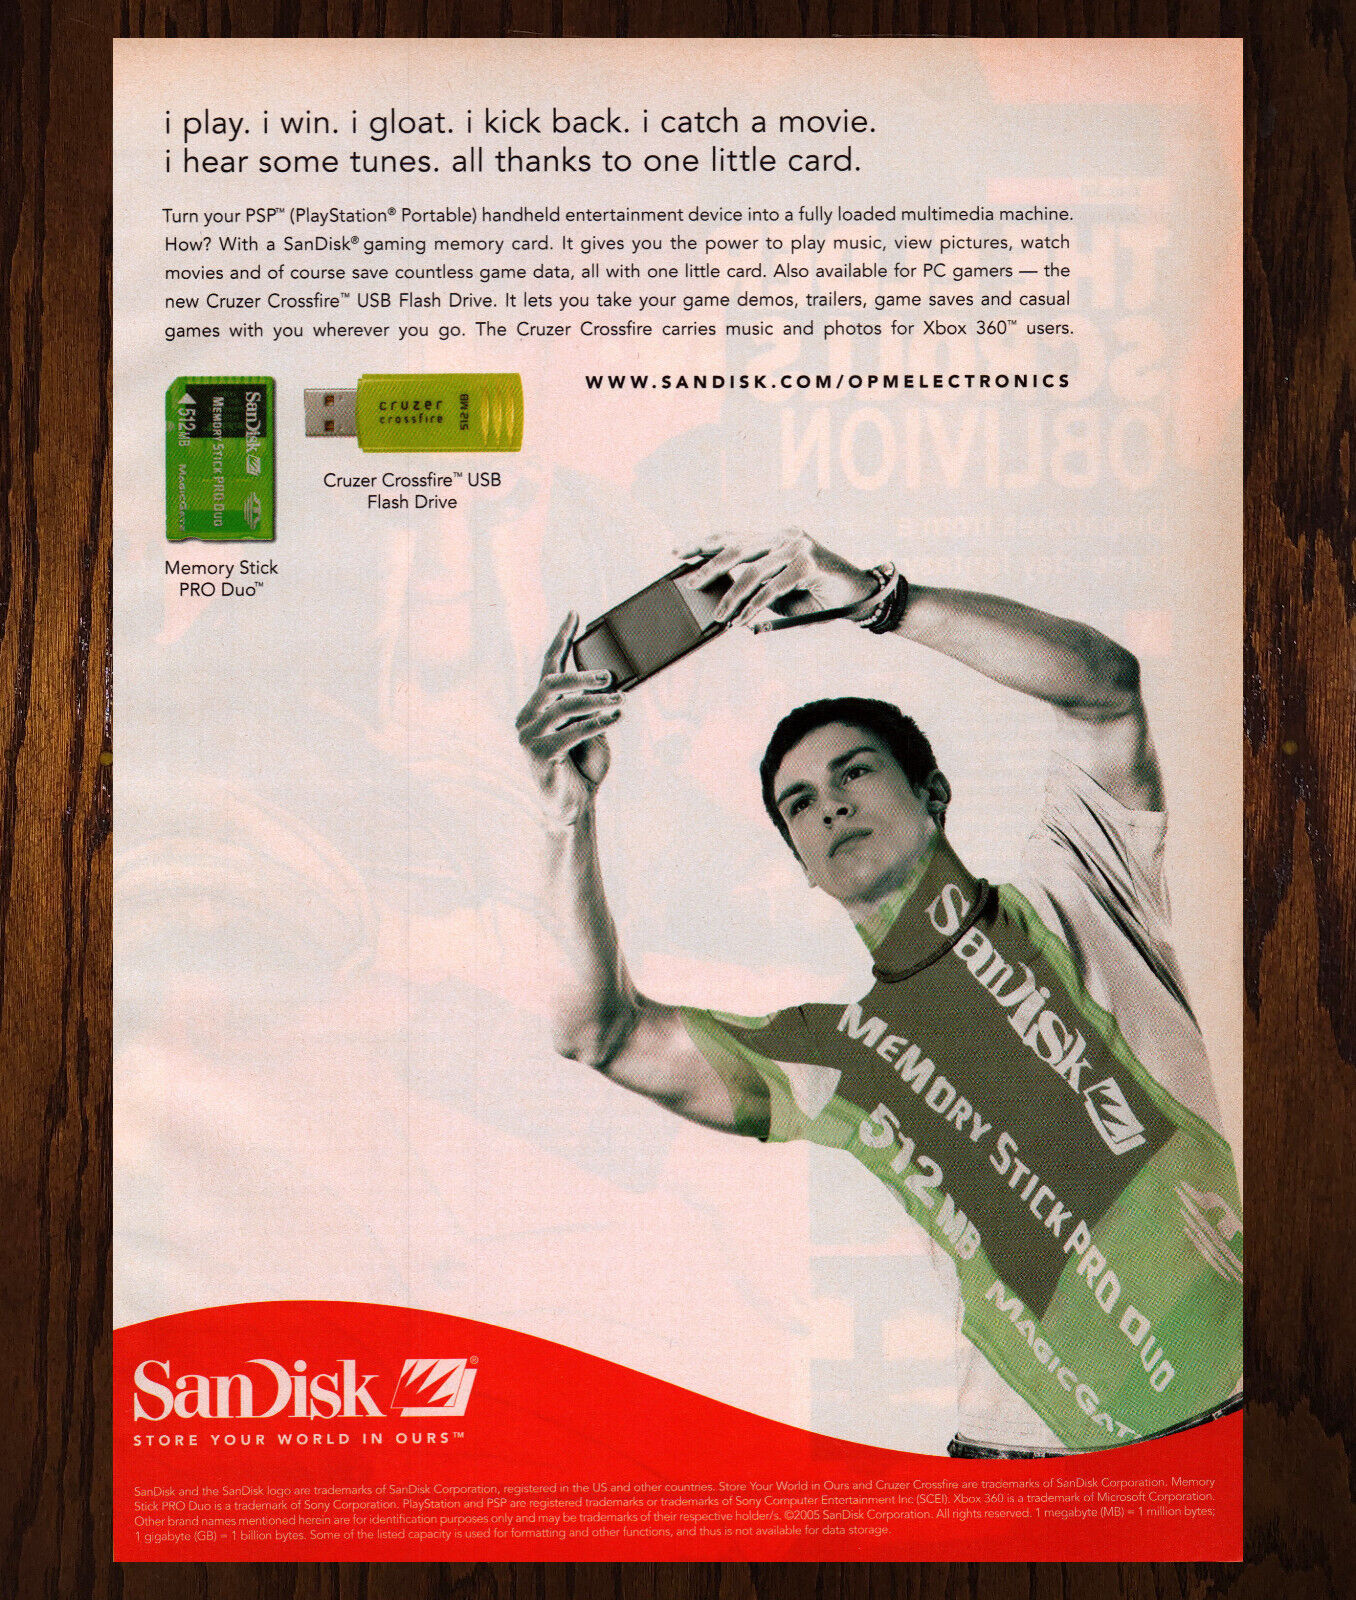 PSP Sandisk Memory Stick Pro Duo - Game Print Ad / Poster Promo Art 2006